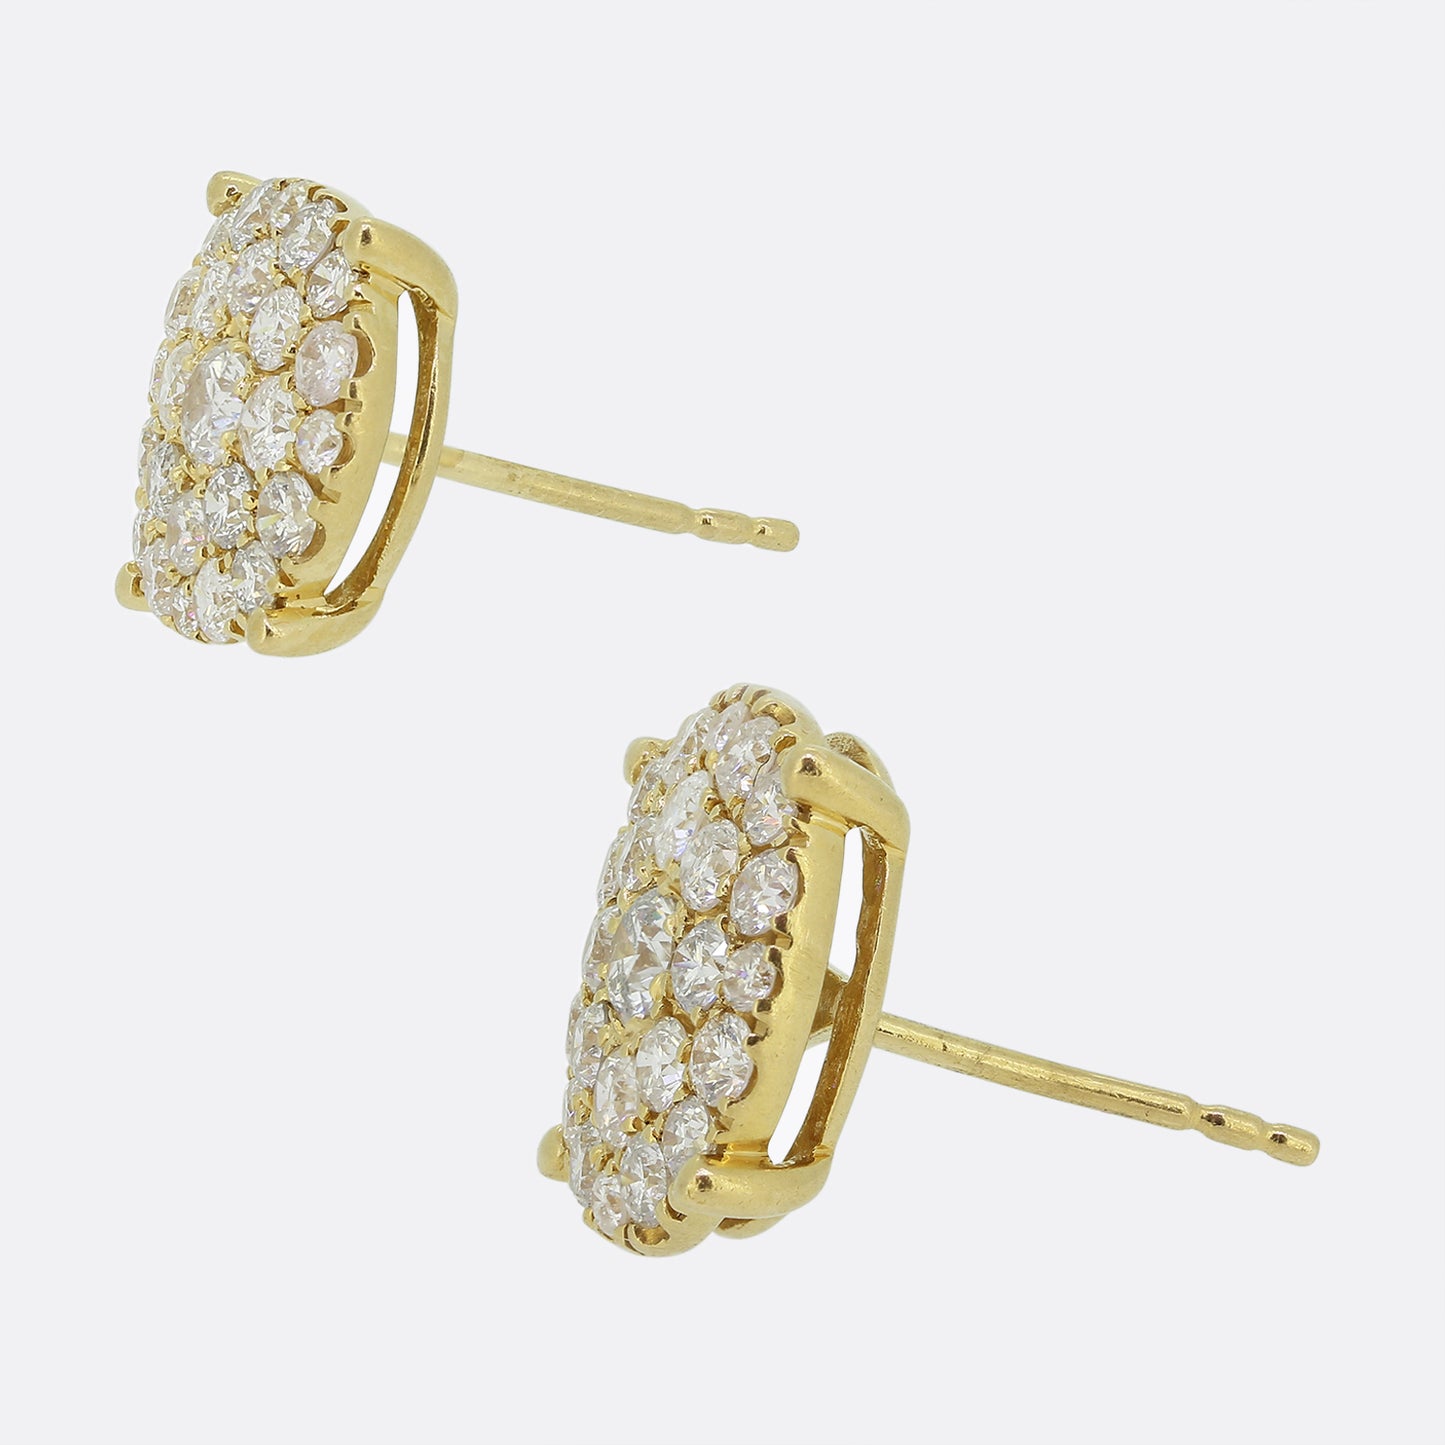 0.90 Carat Diamond Cluster Earrings